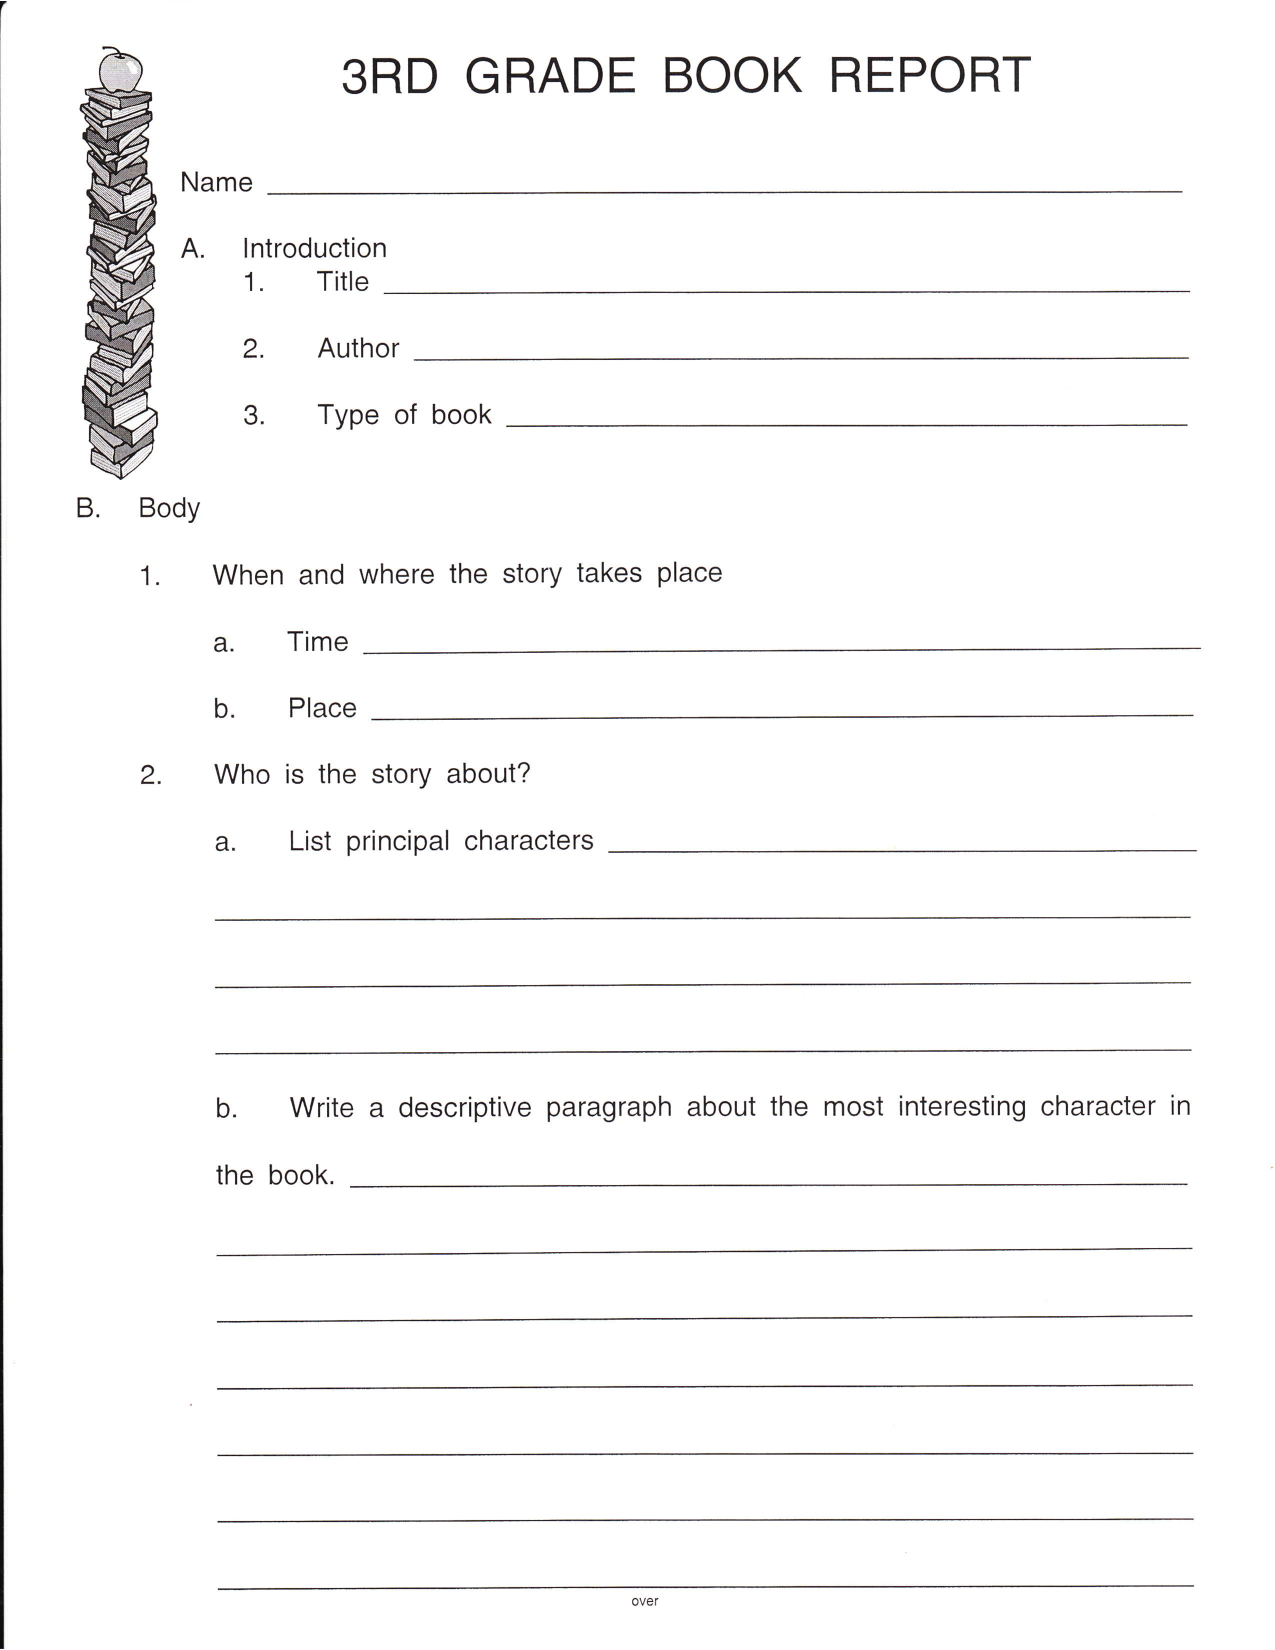 Second Grade Book Report Template | Scope Of Work Template In Second Grade Book Report Template